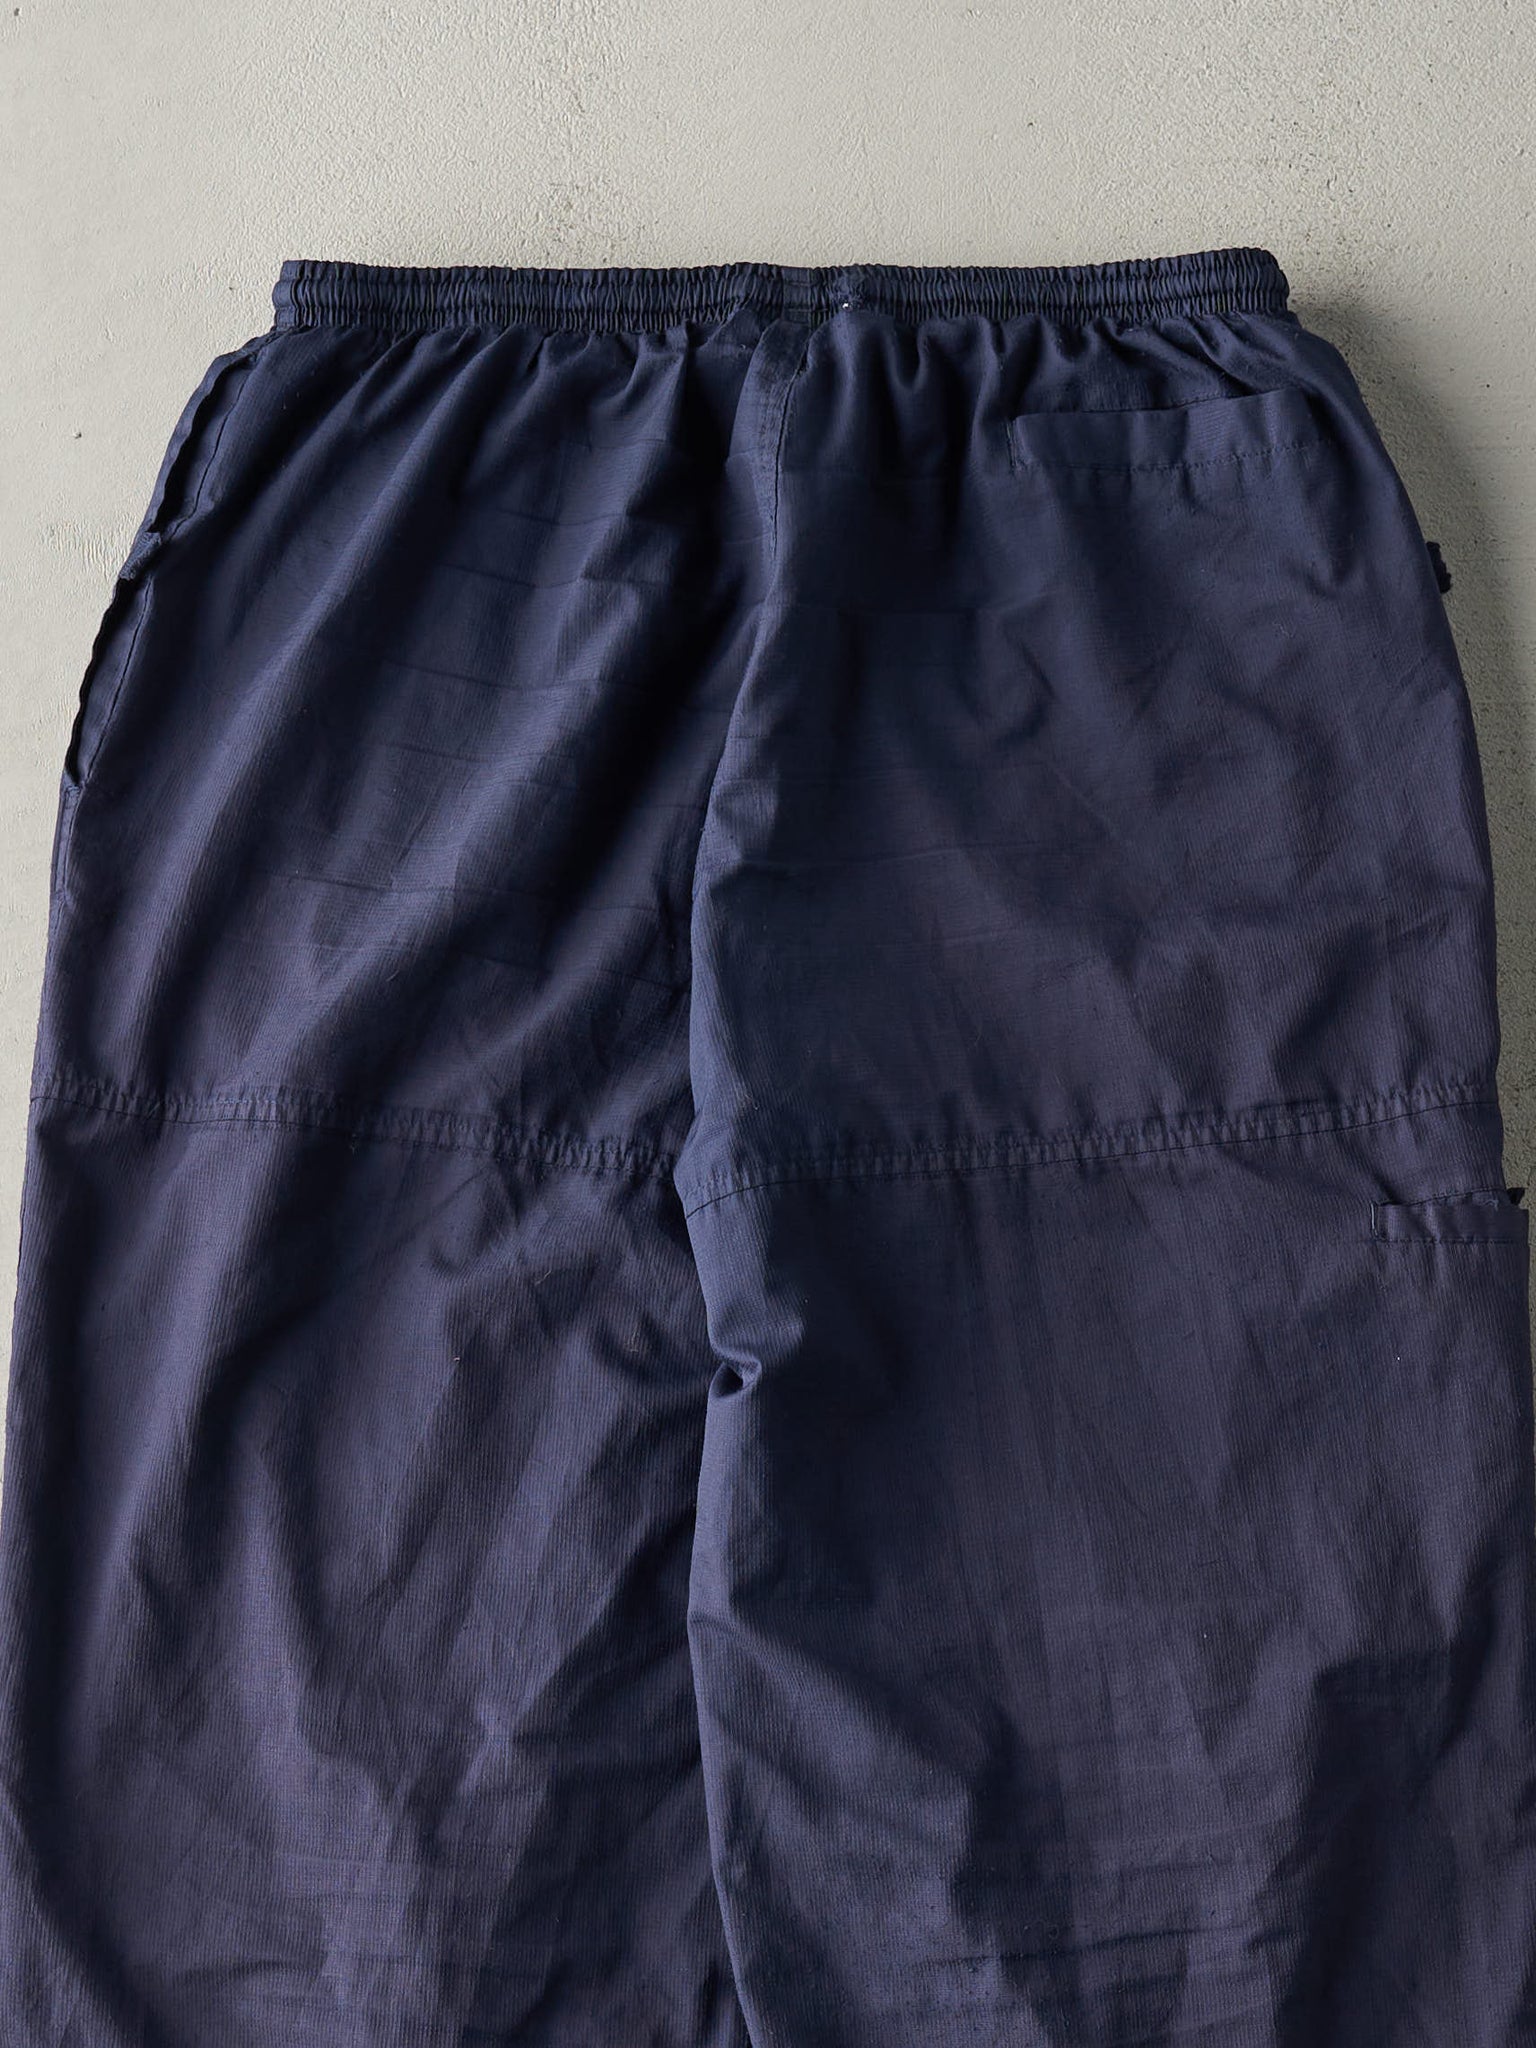 Vintage 90s Navy Blue Embroidered Reebok Track Pants (31x29.5)